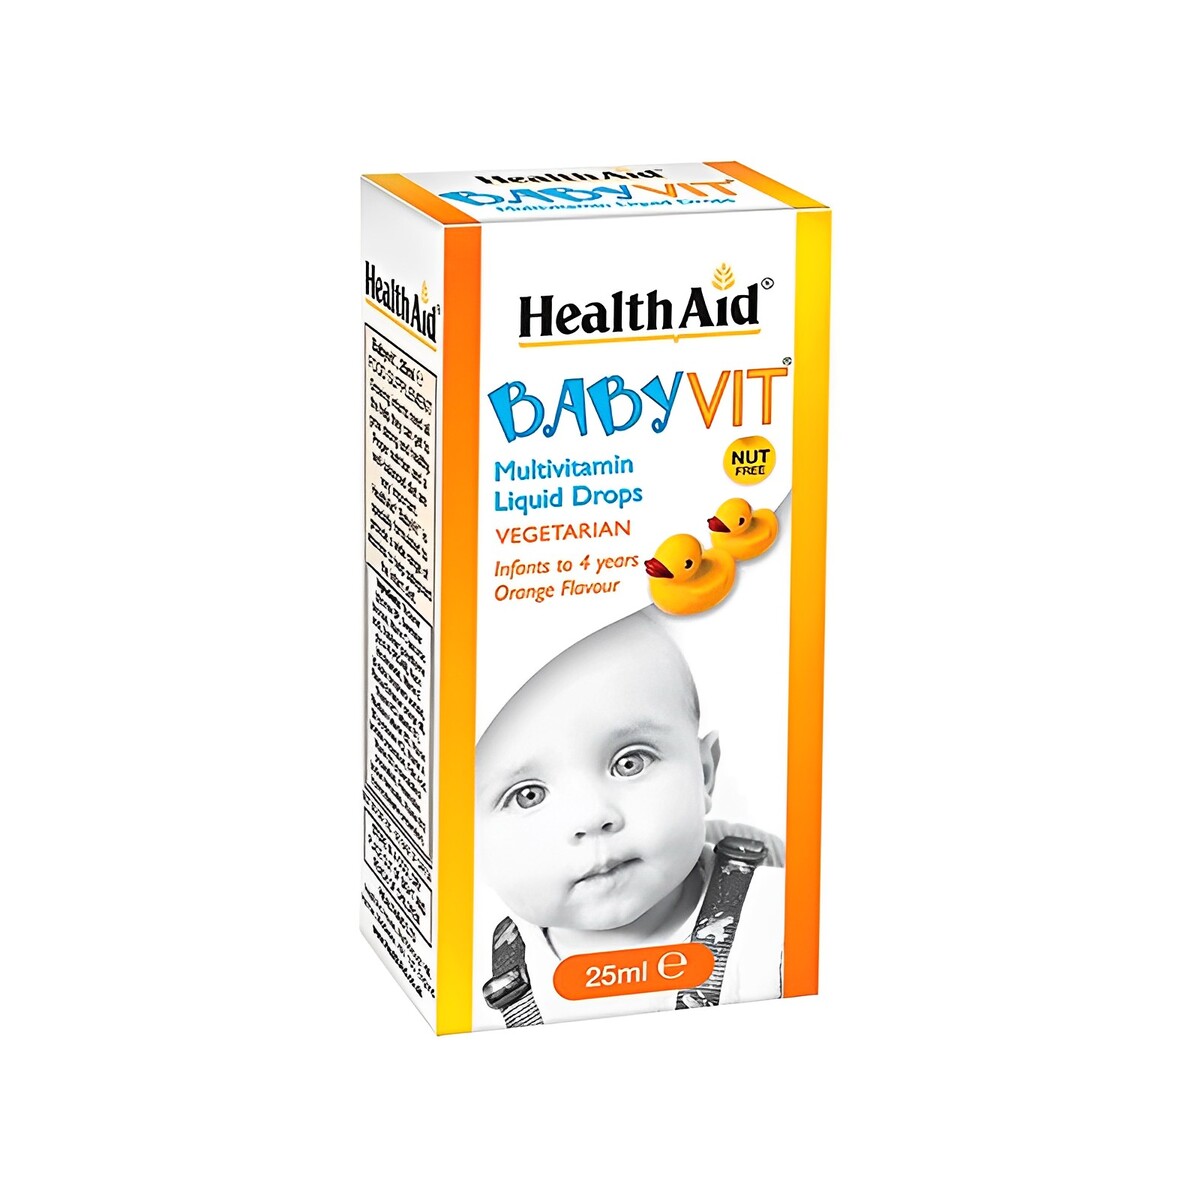 HealthAid Baby Vit Liquid Drops, hỗ trợ cung cấp vitamin và khoáng chất 25ml